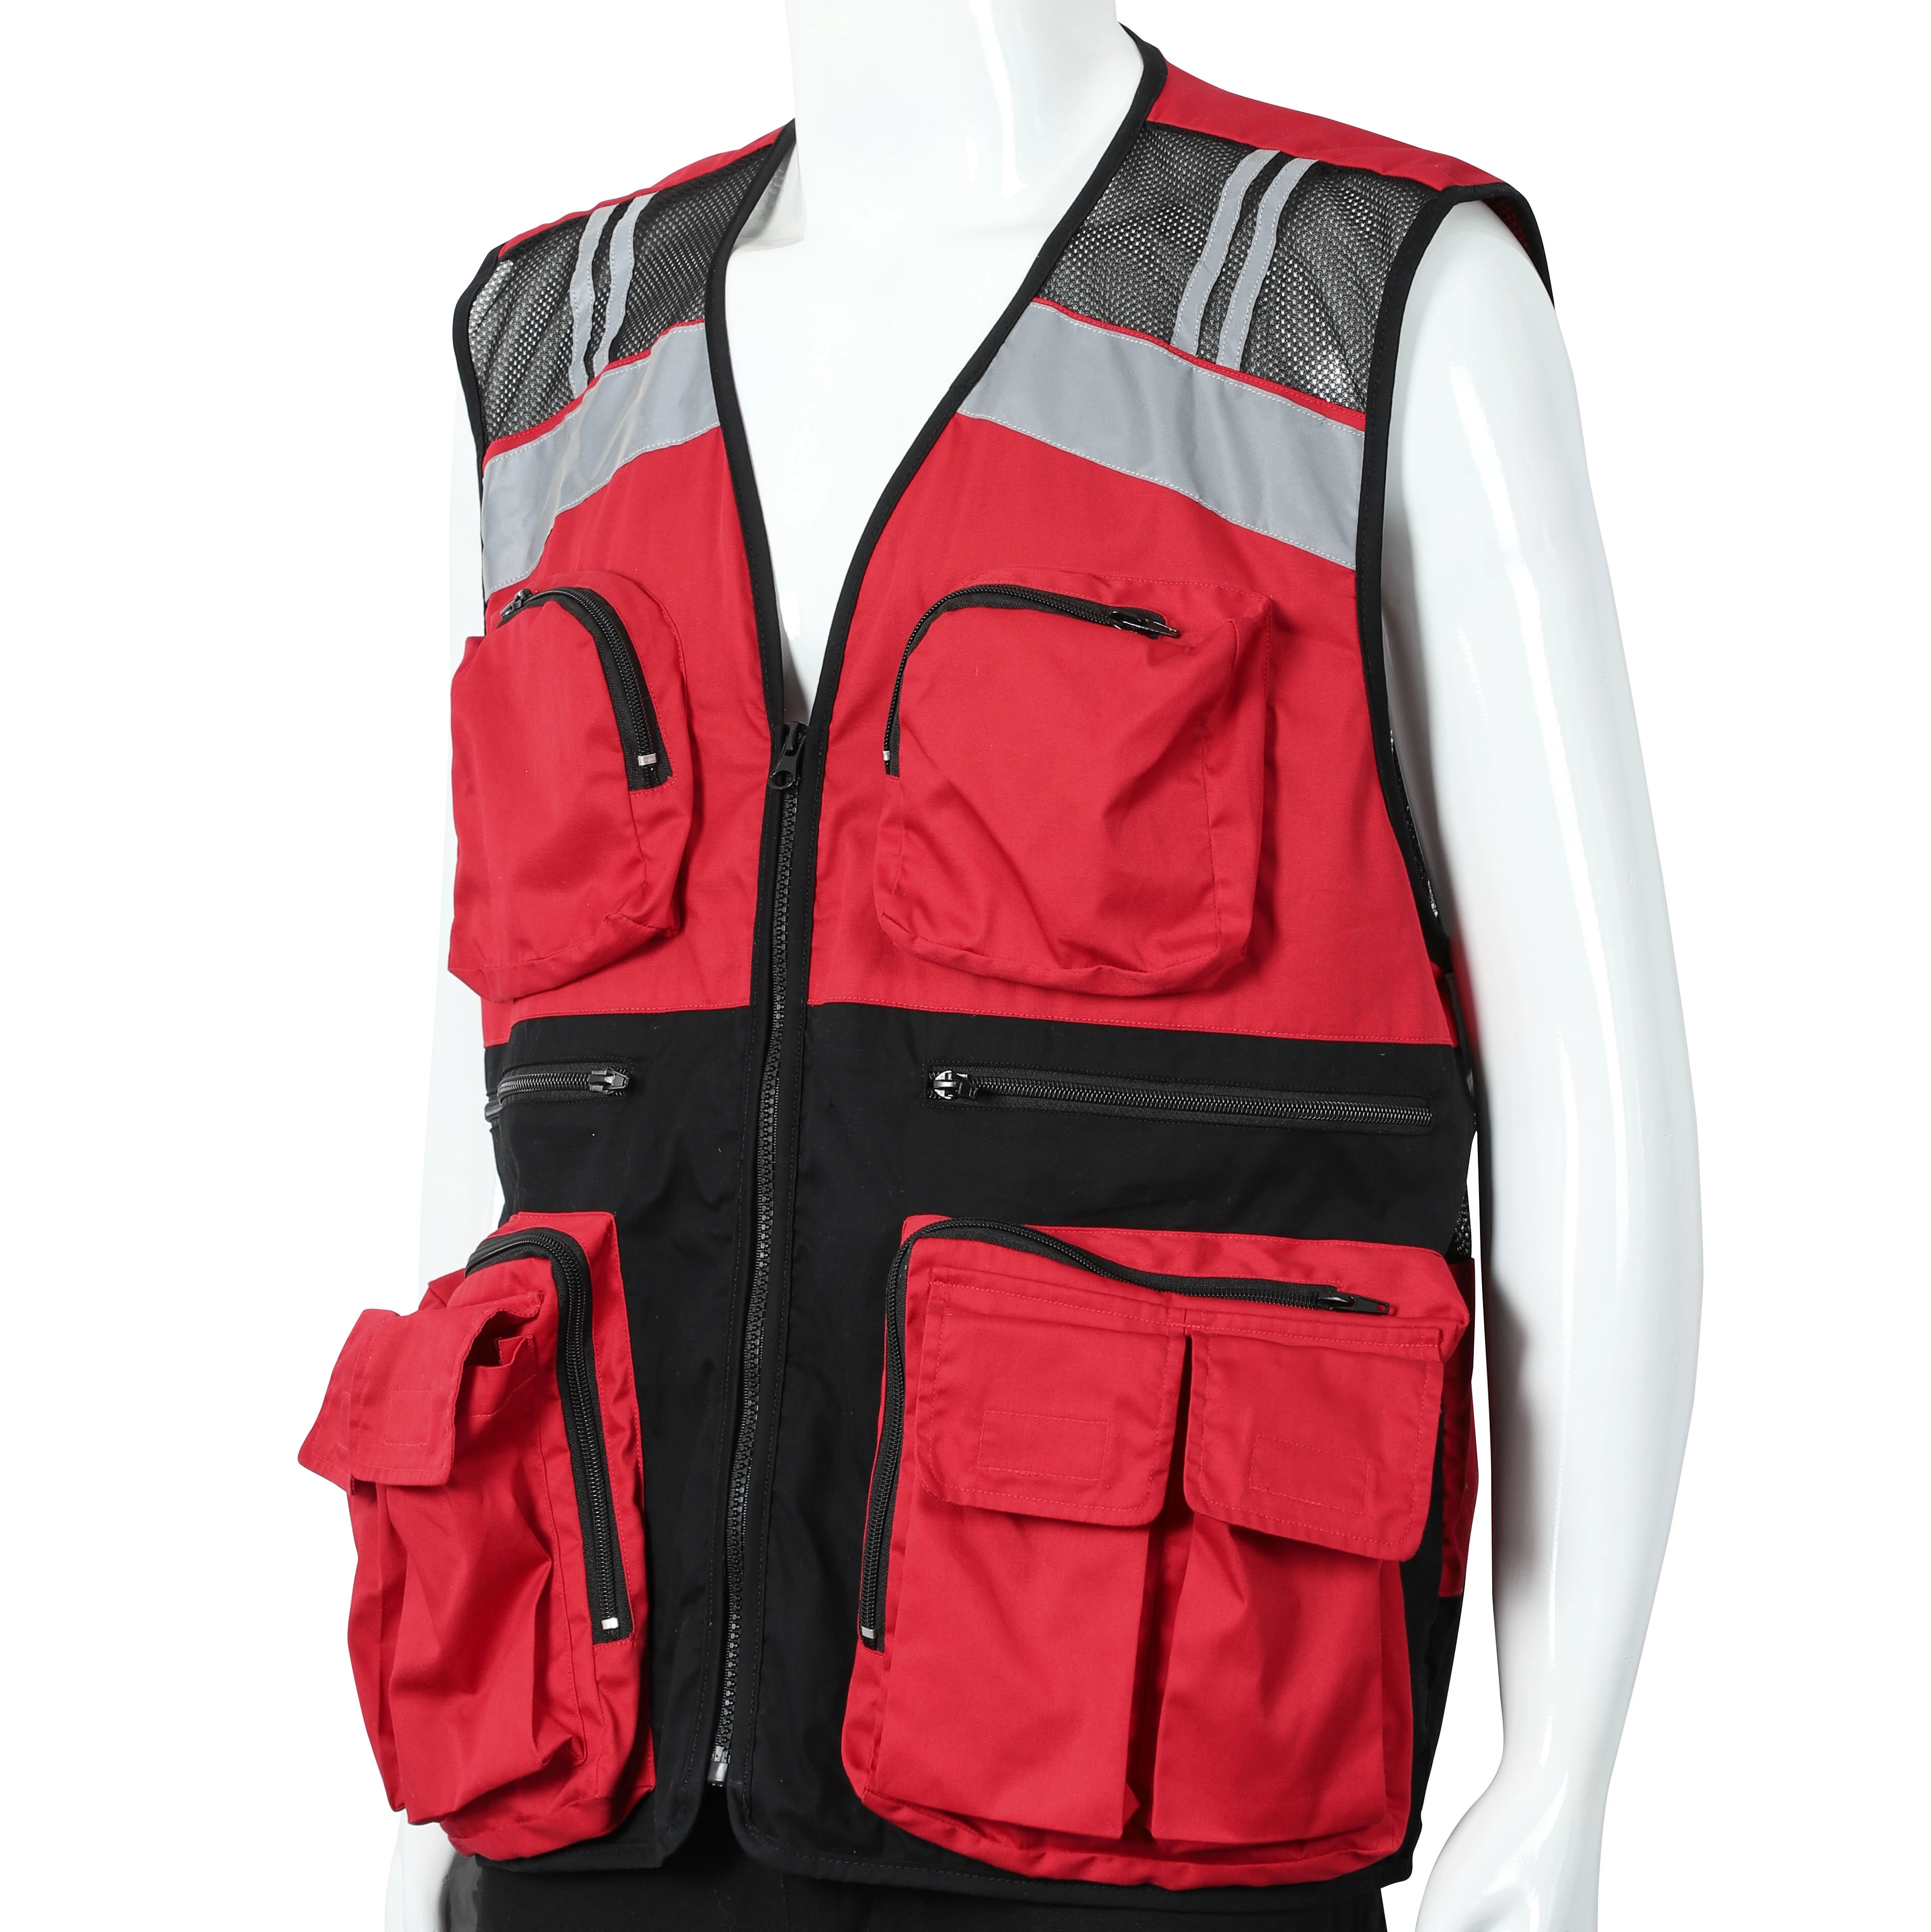 Reflective Vest Jacket Strip Mesh Fabric Construction Security Safety Vest Reflective Clothing Working uniform